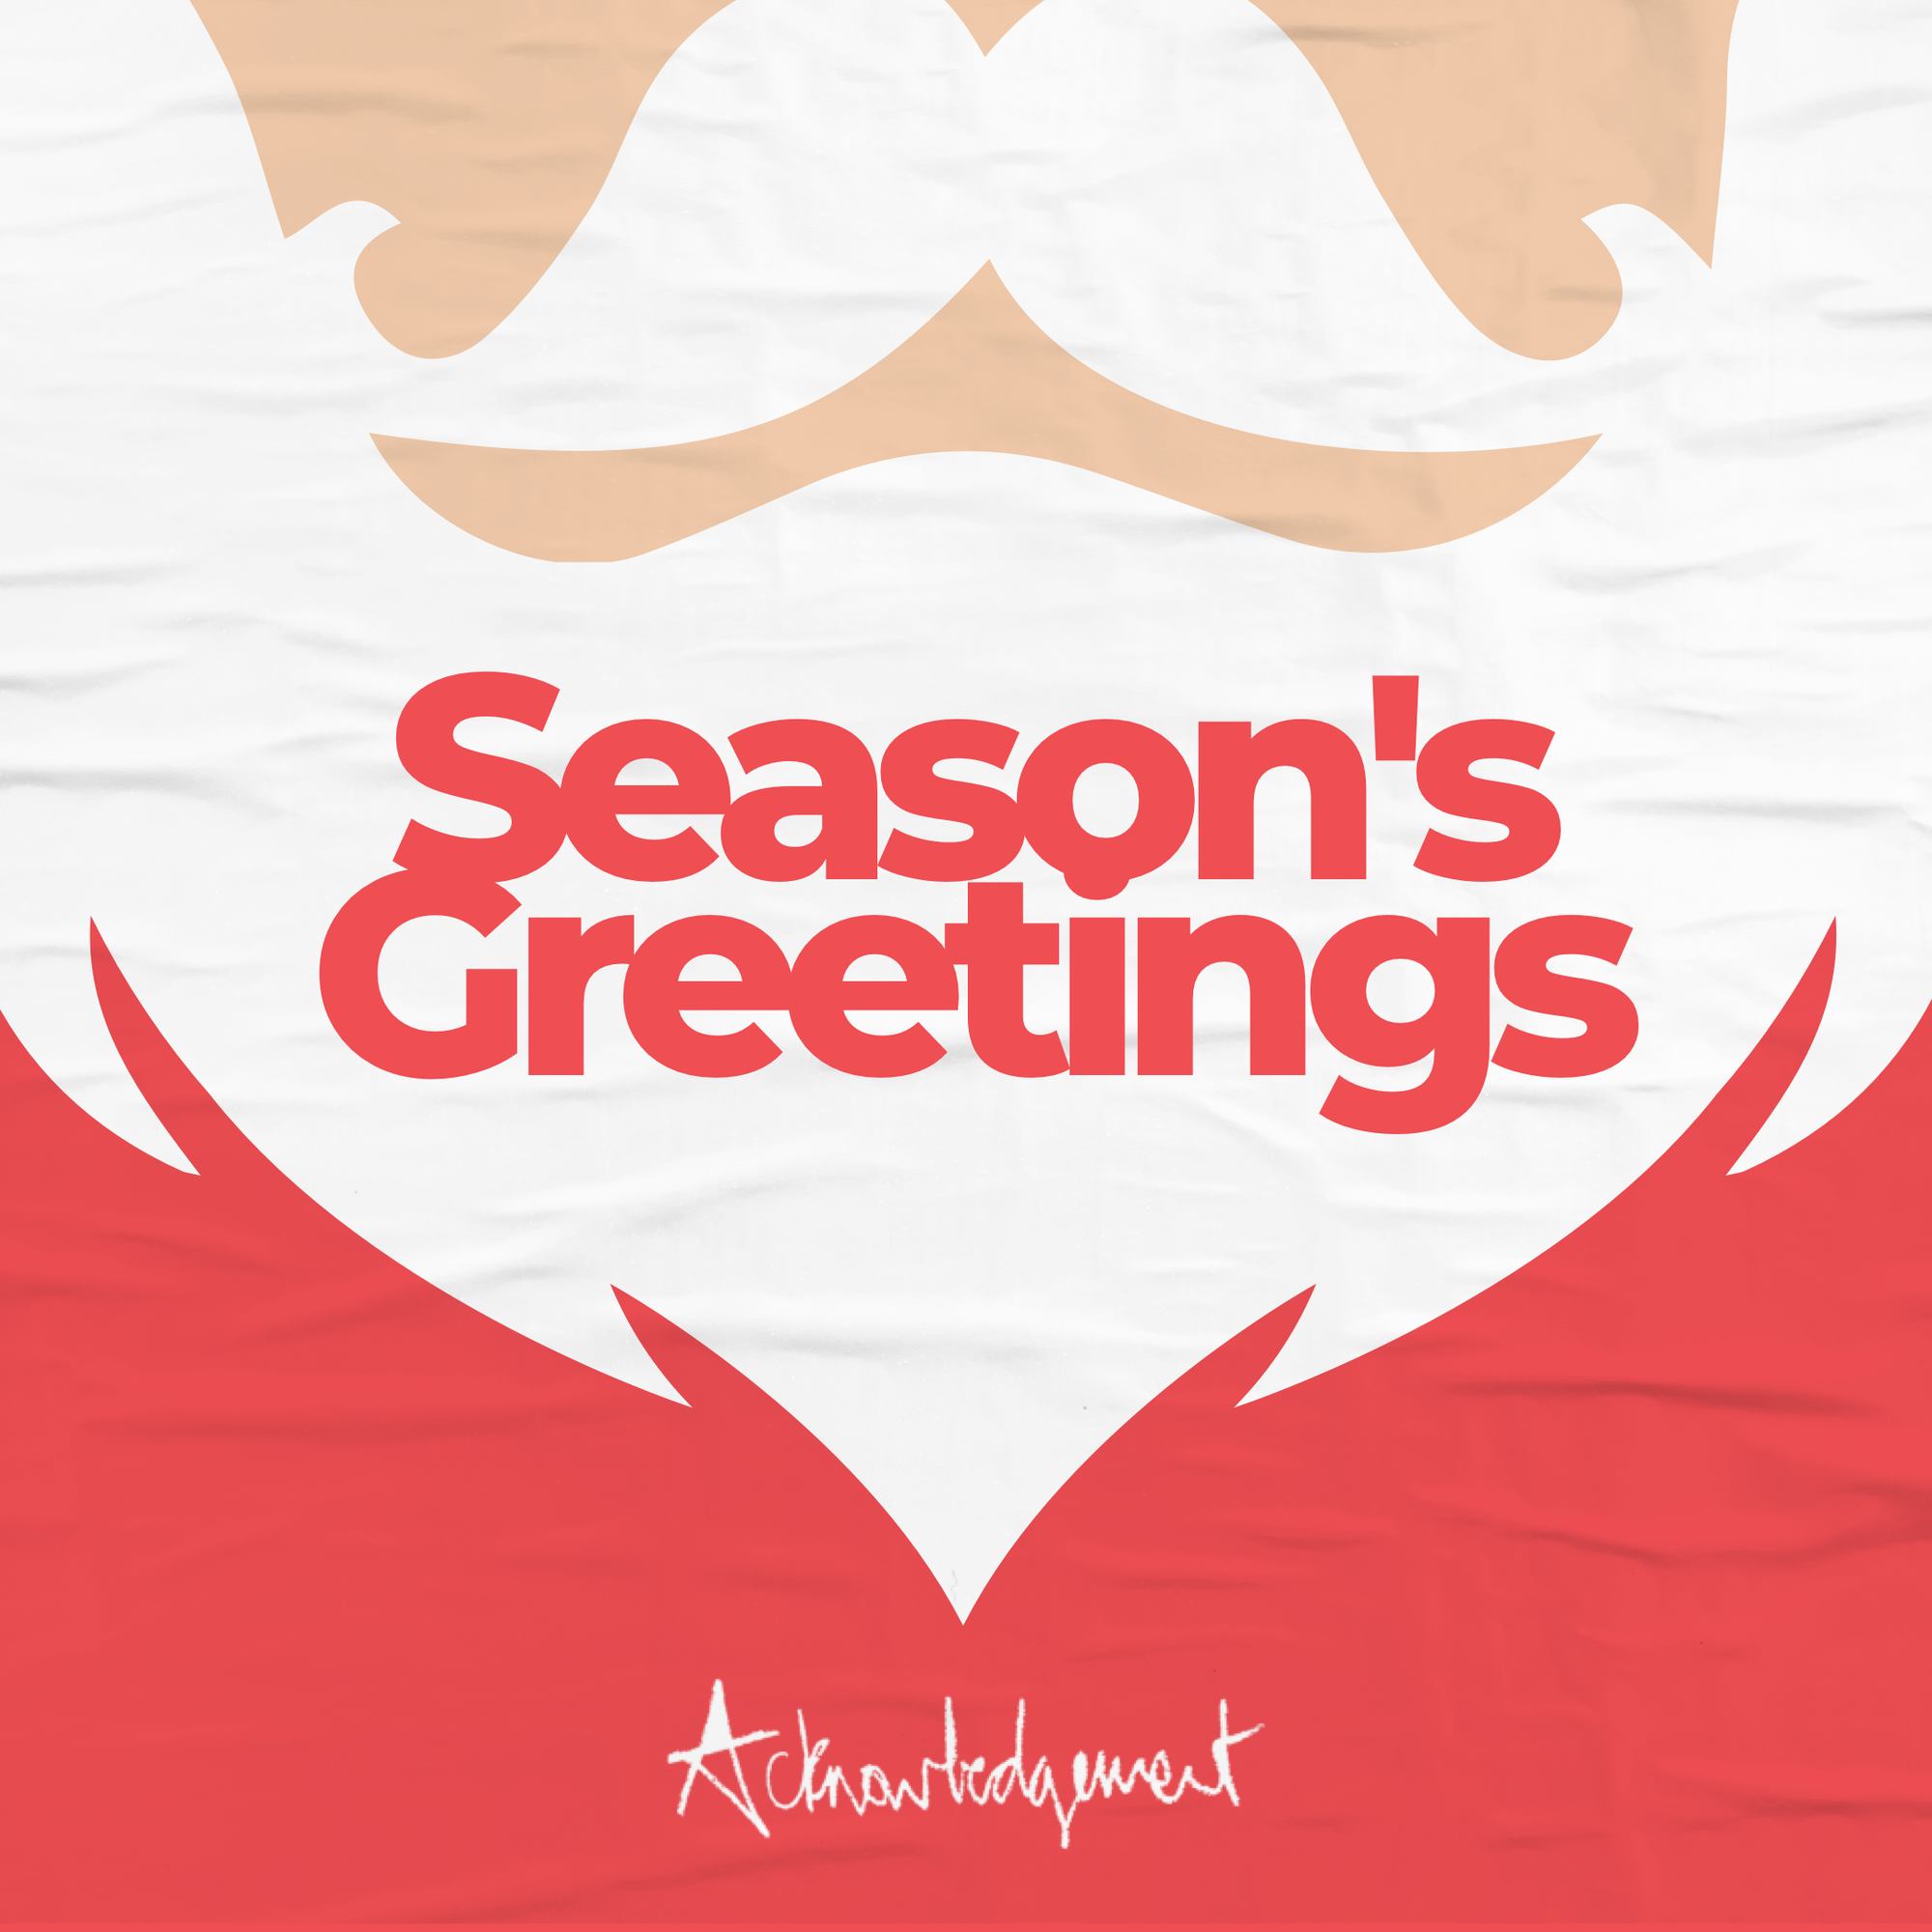 🎄 Season's Greetings! 🎄